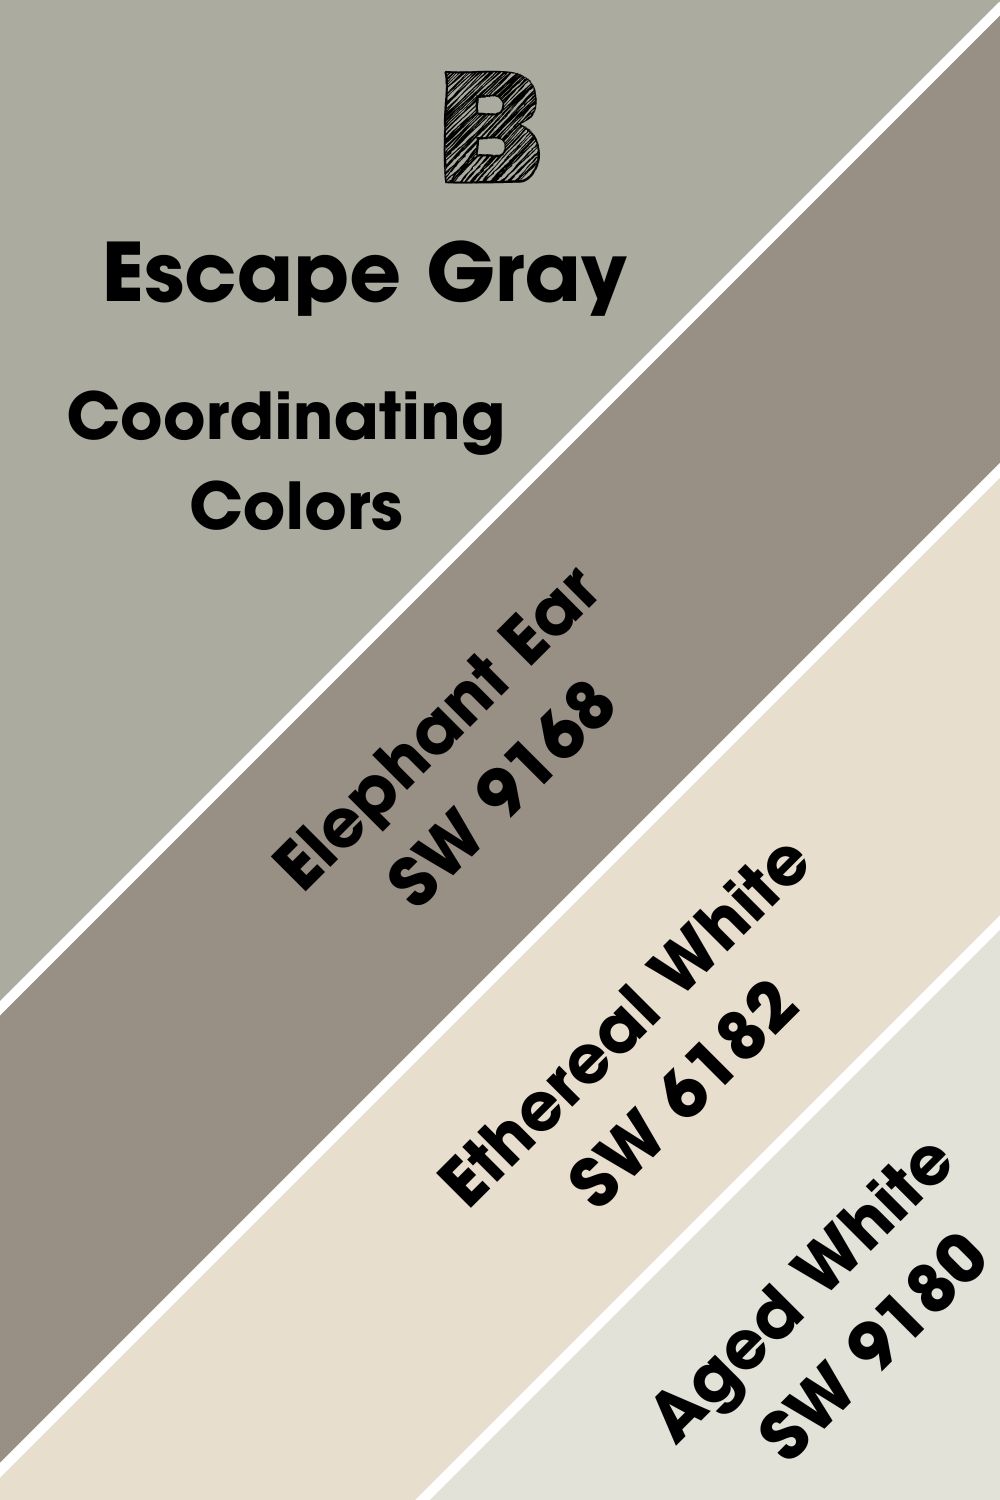  Escape Gray Coordinating Colors